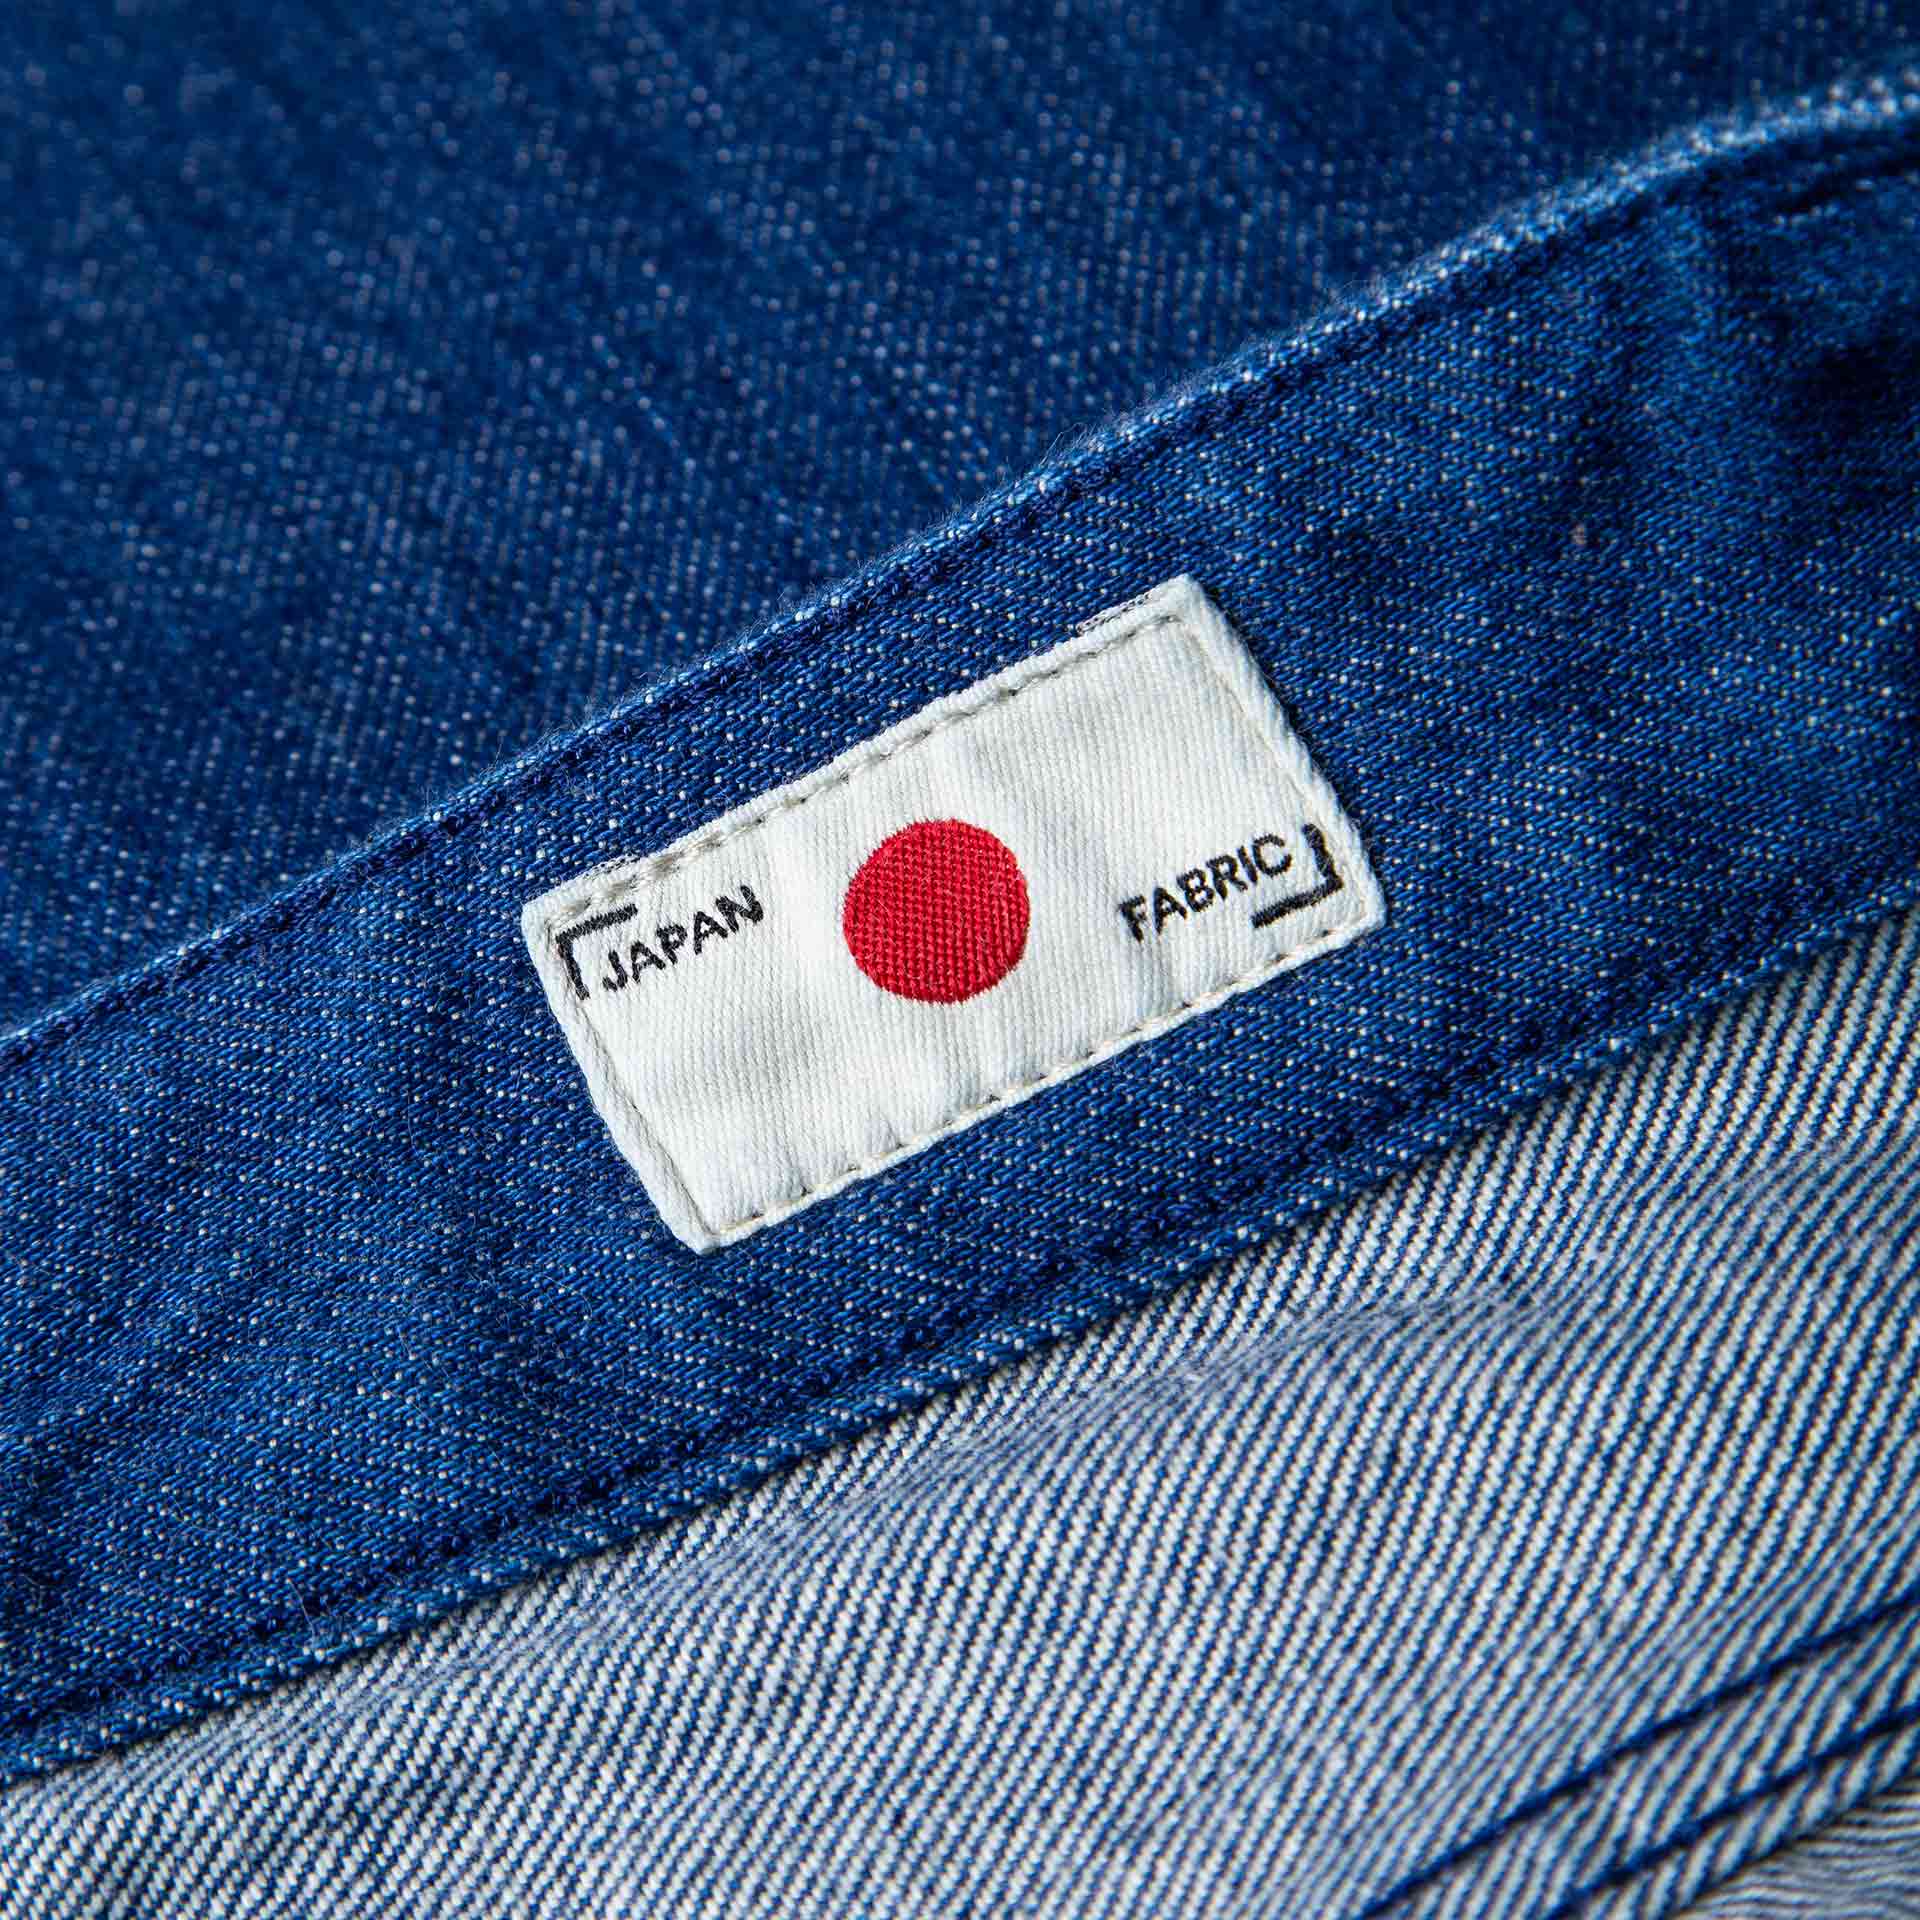 Men's Blue Denim Selvedge Jeans - GBNY